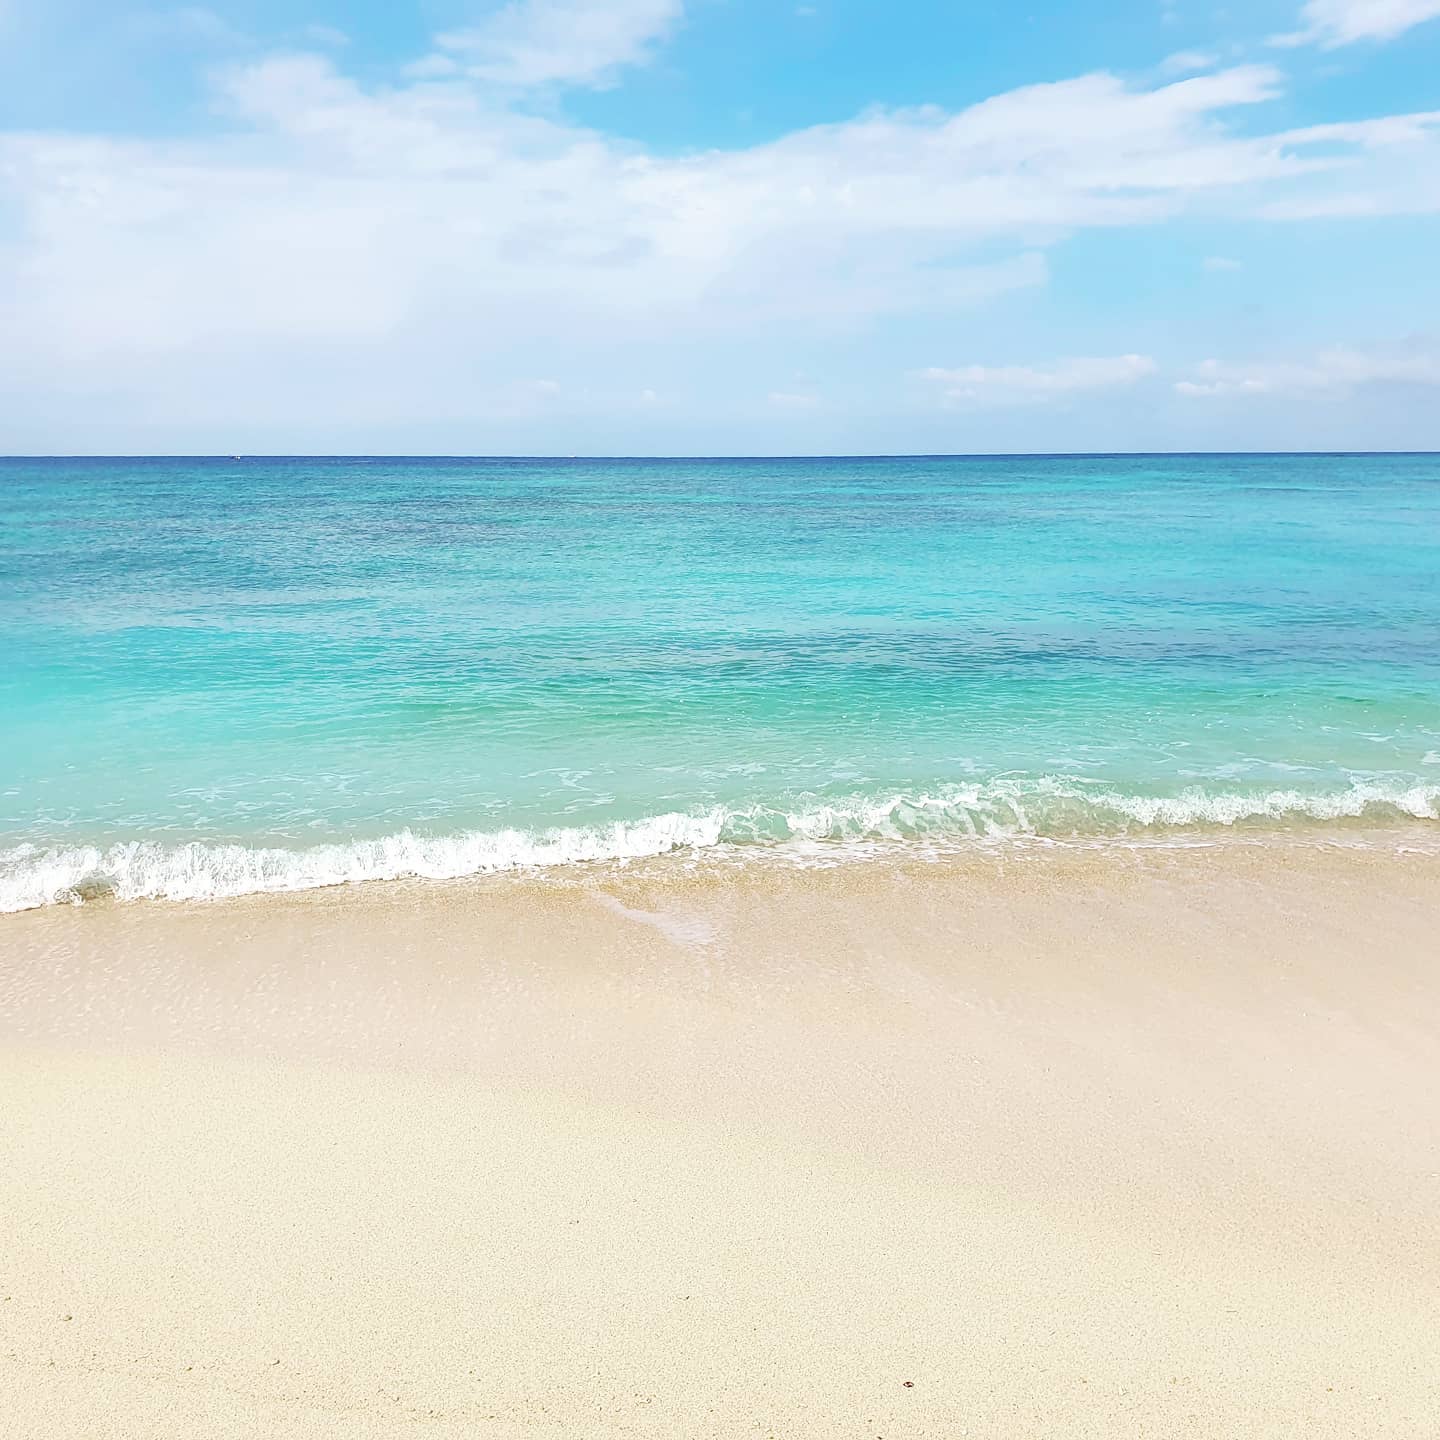 Le weekend 😎🏖☀️
.
.
.
.
.
#blue #bleu #beach #beachlife #ocean #weekendescape #weekendvibes #weekend #island #islandvibes #naturephotography #nature #freedom #space #freshair #plage #beautiful #feetinthesand #windinmyhair #japon #japan #okinawa